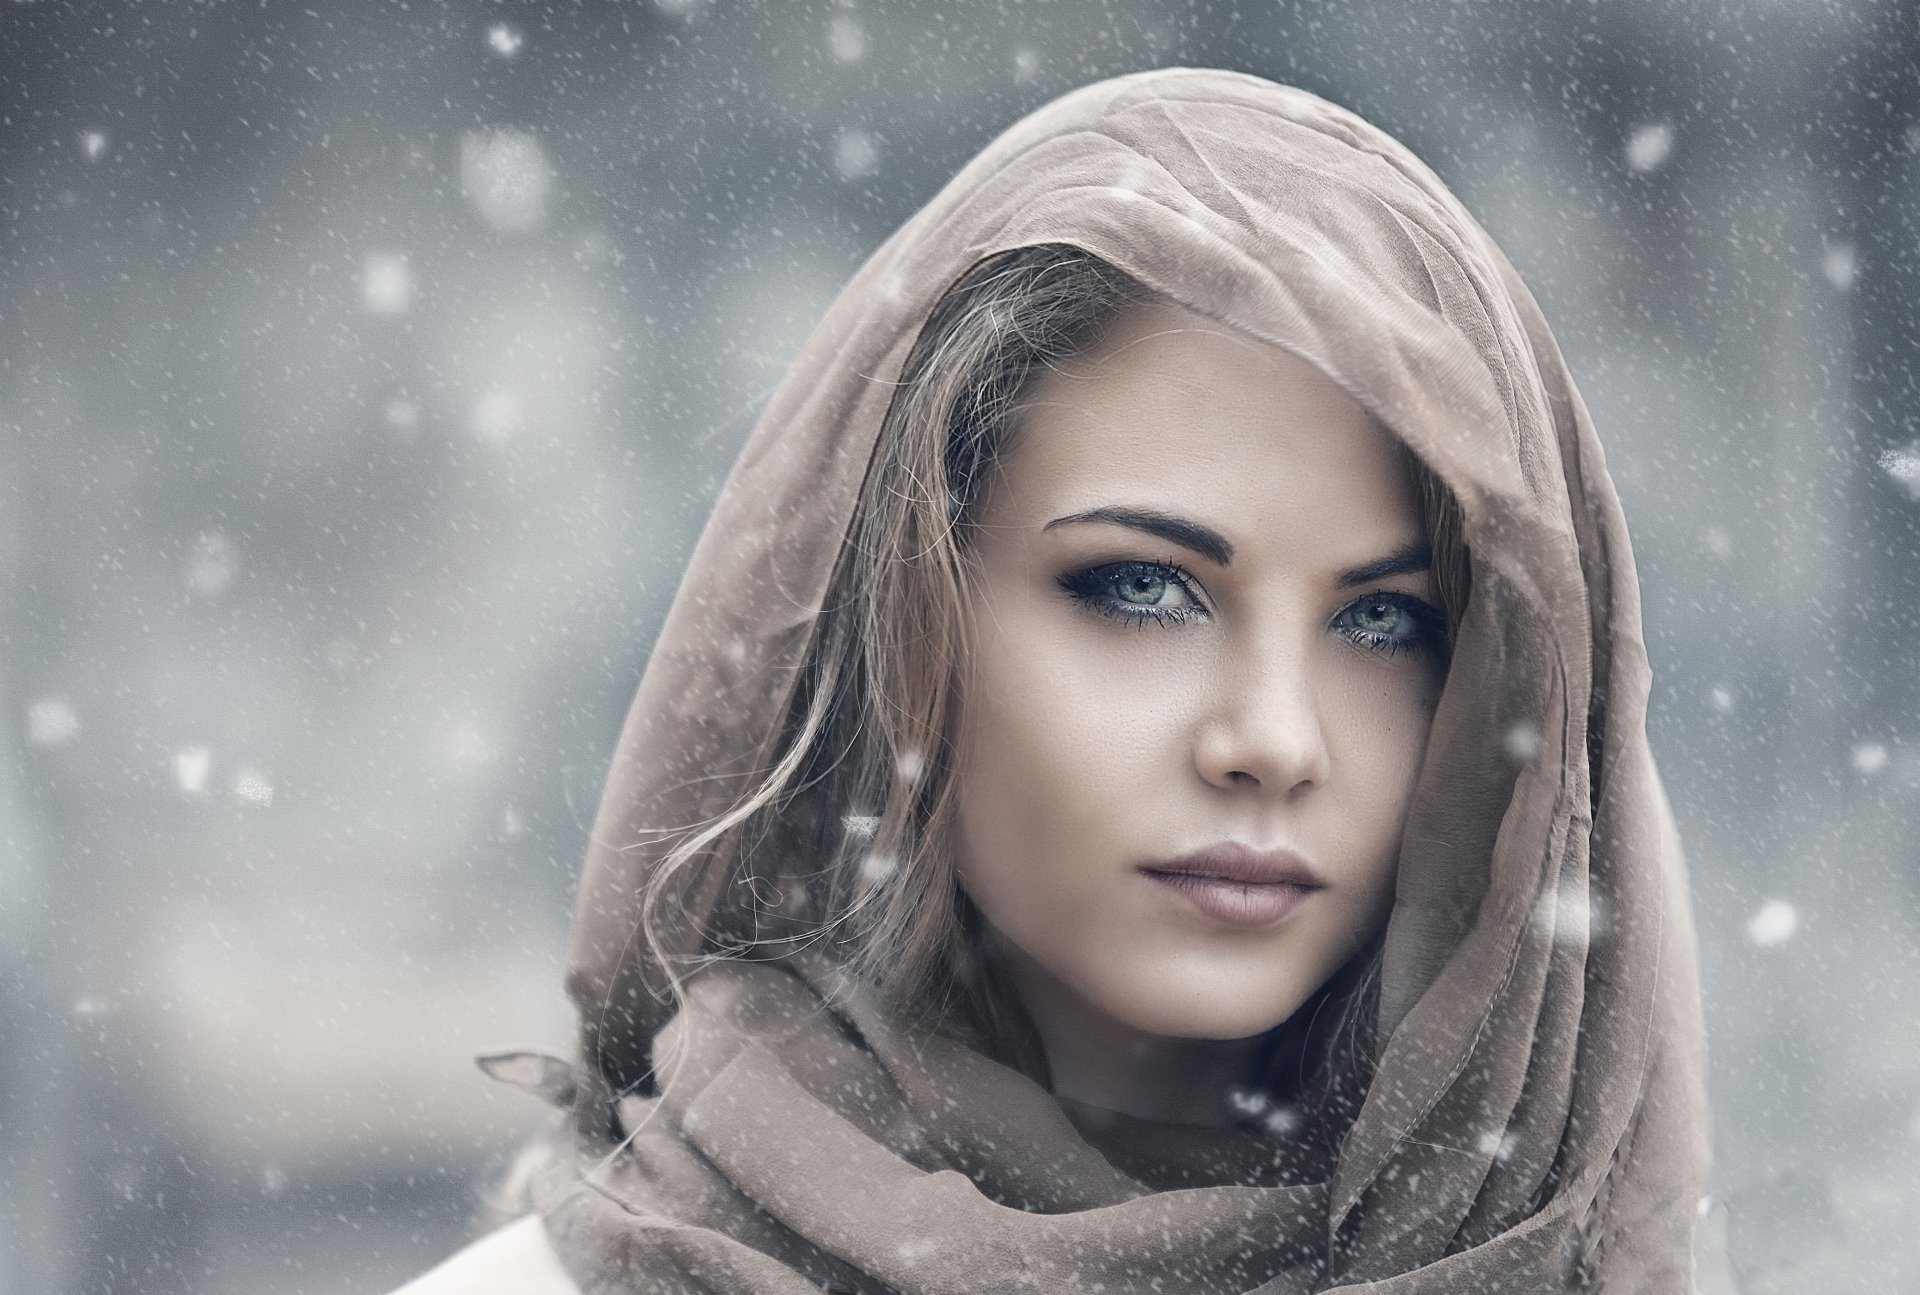 Pretty Girl In Snow Shower 5k Retina Ultra Hd Wallpaper Hintergrund